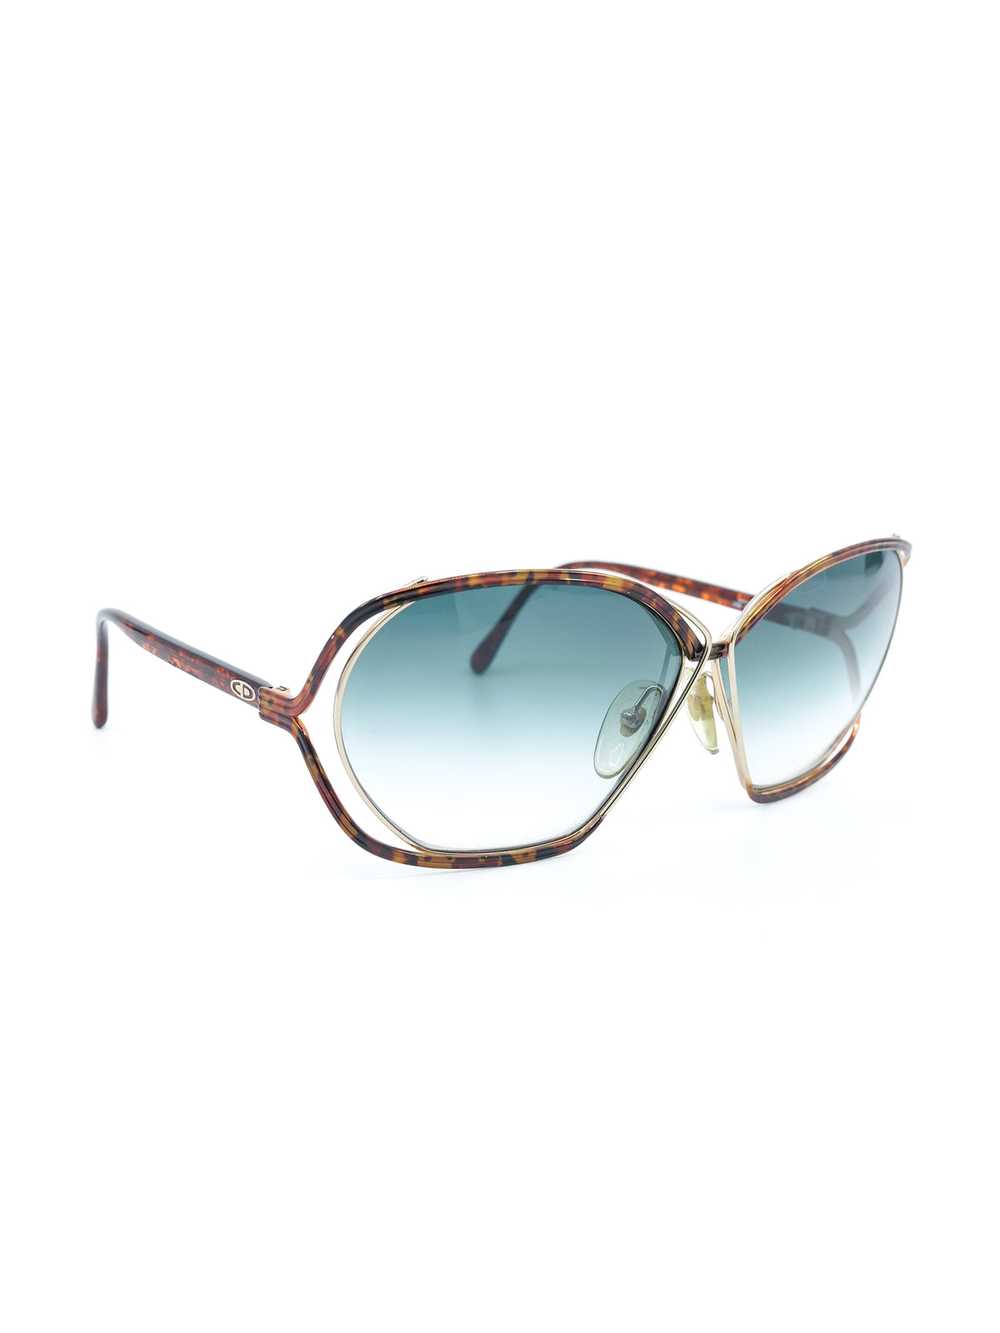 Christian Dior Tortoiseshell Butterfly Sunglasses - image 2